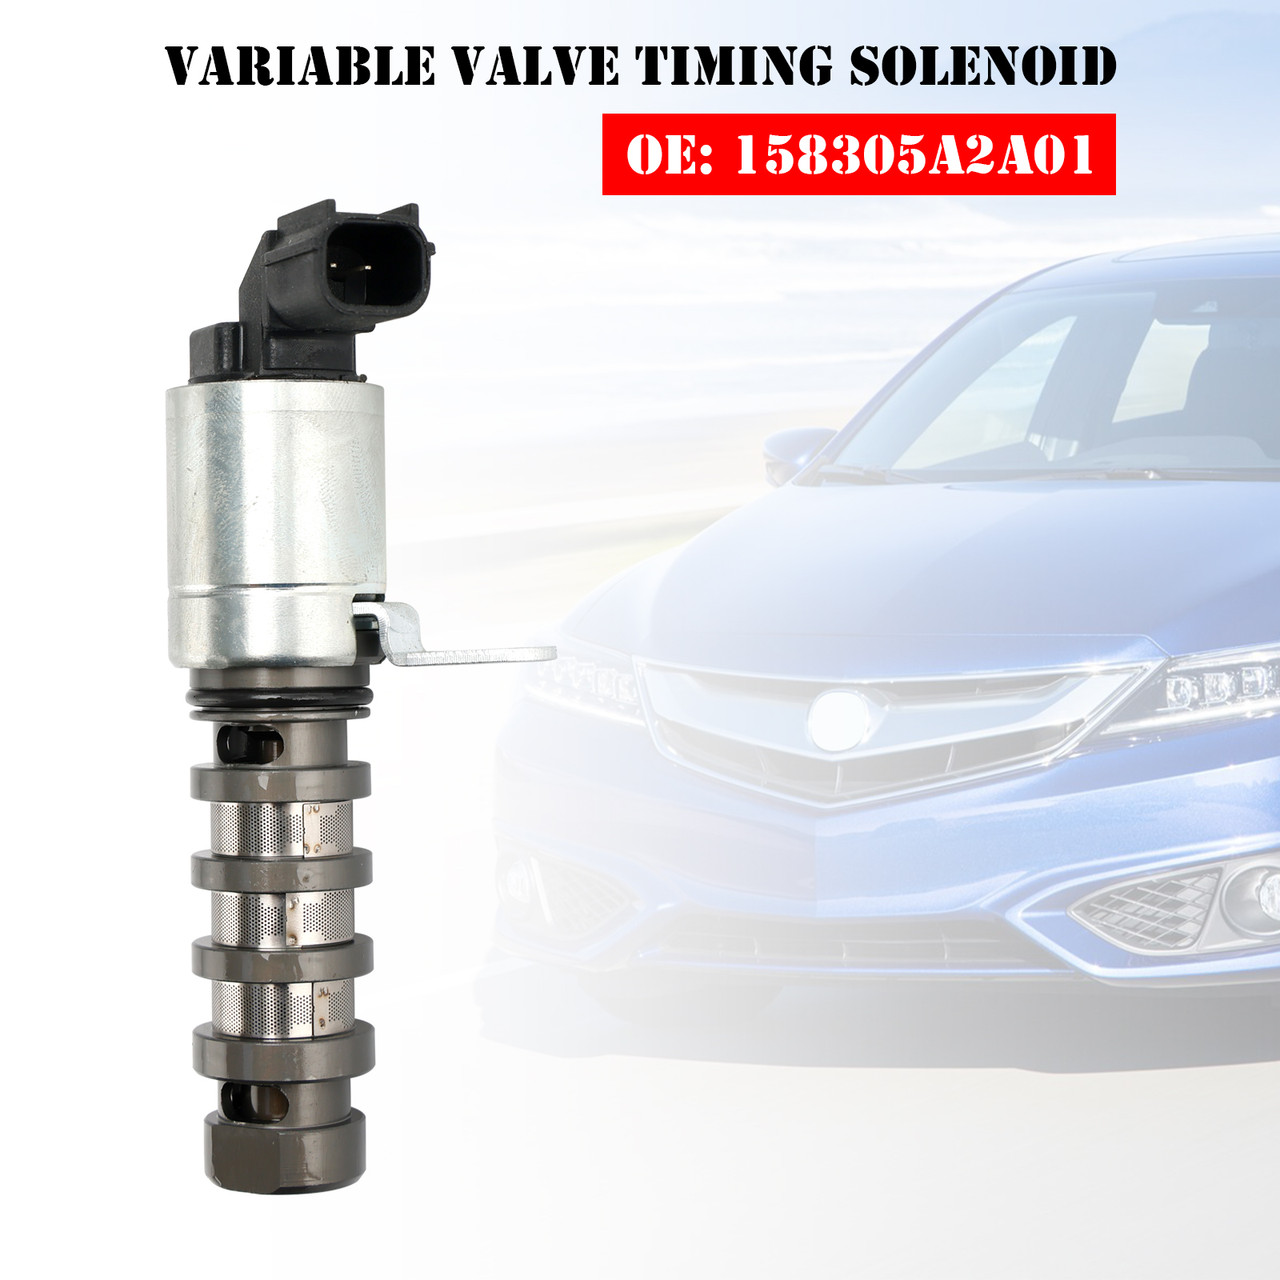 Variable Valve Timing VVT Solenoid for Honda Accord CR-V 2.4L 158305A2A01